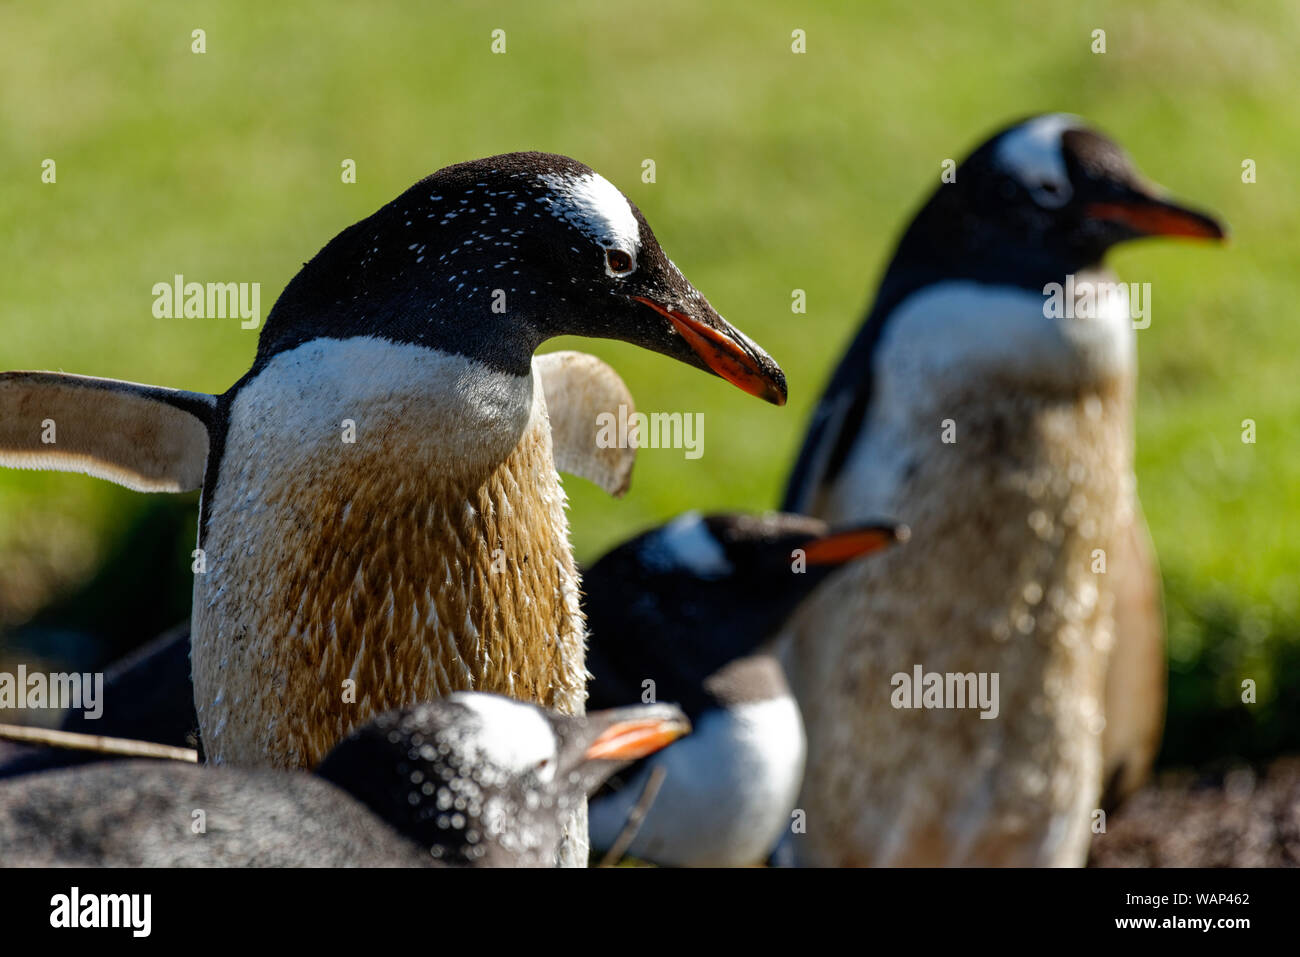 Eselspinguine (Pygoscelis papua) in der Brutkolonie, Falkland Inseln. Gentoo Penguins in der Kolonie, Falkland Inseln. Stockfoto